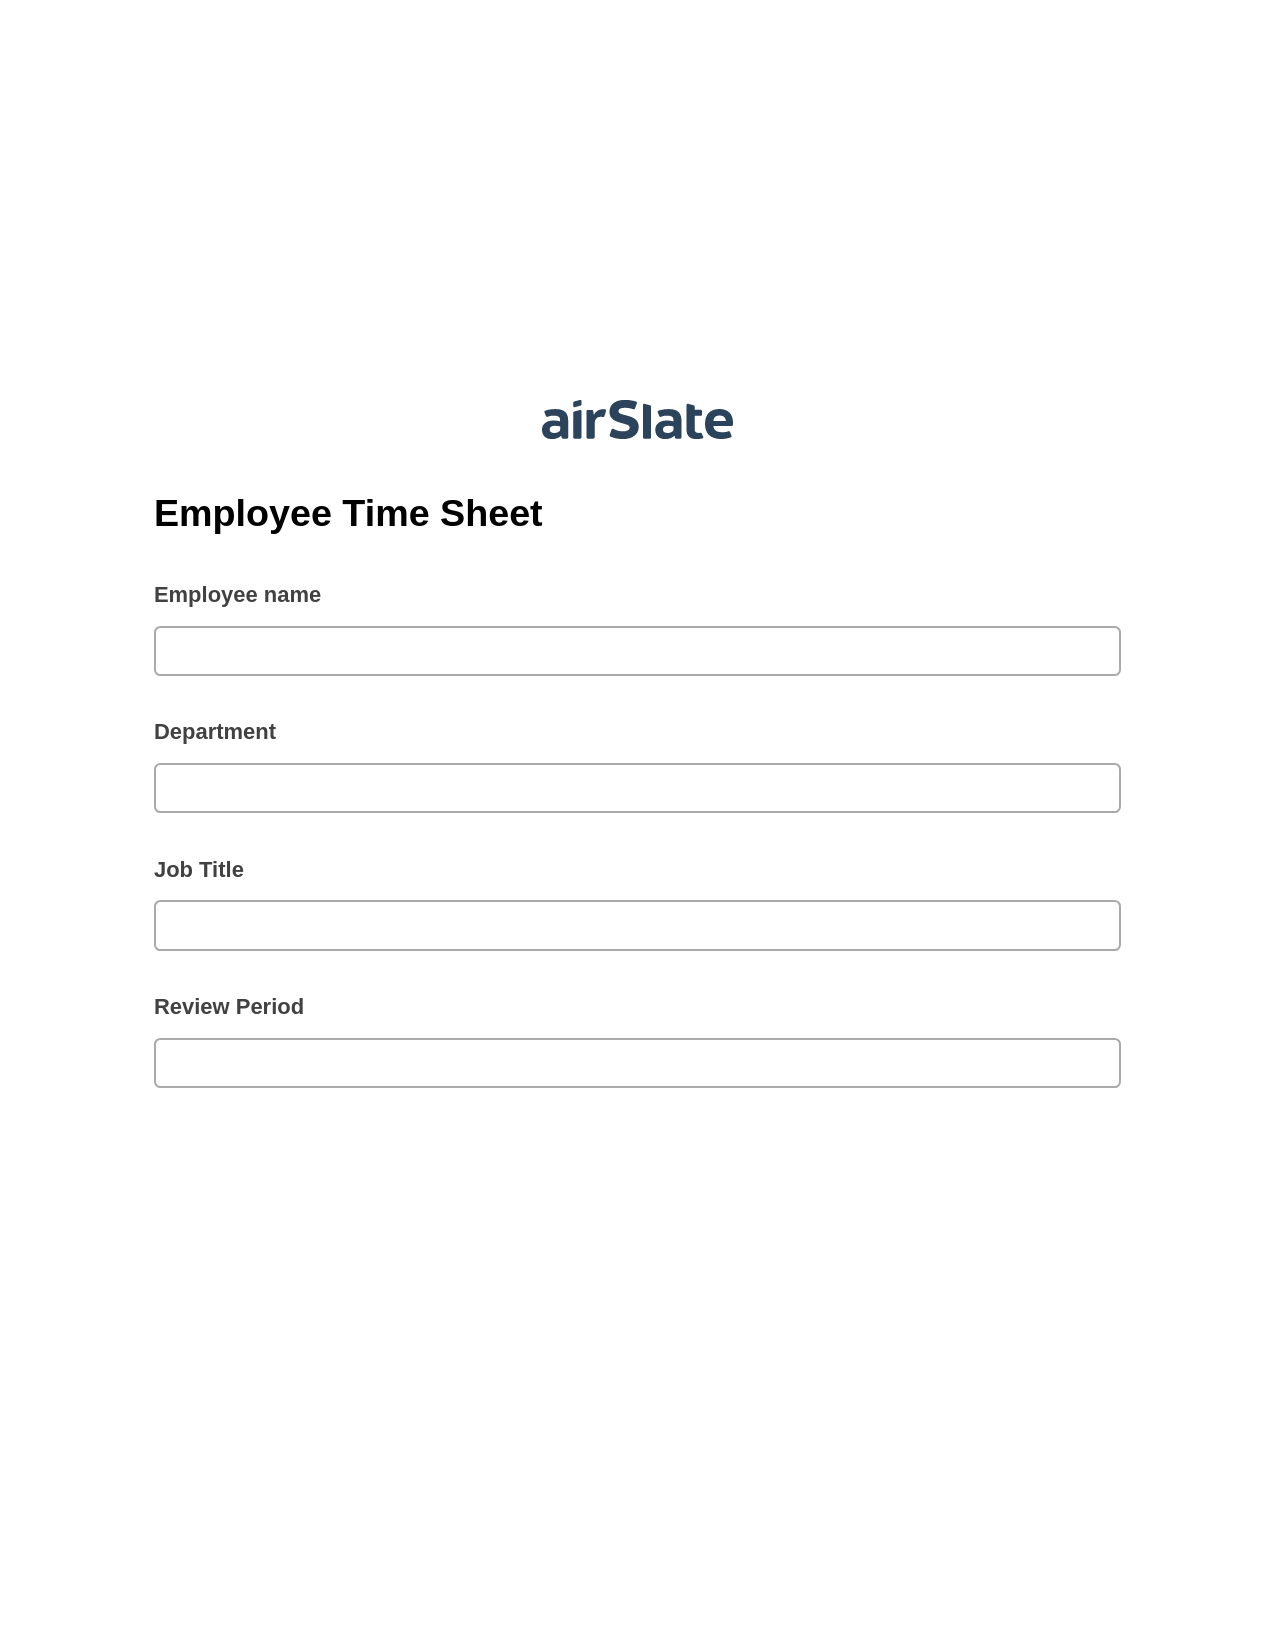 Employee Time Sheet Pre-fill from Salesforce Records Bot, Create Salesforce Records Bot, Archive to Dropbox Bot